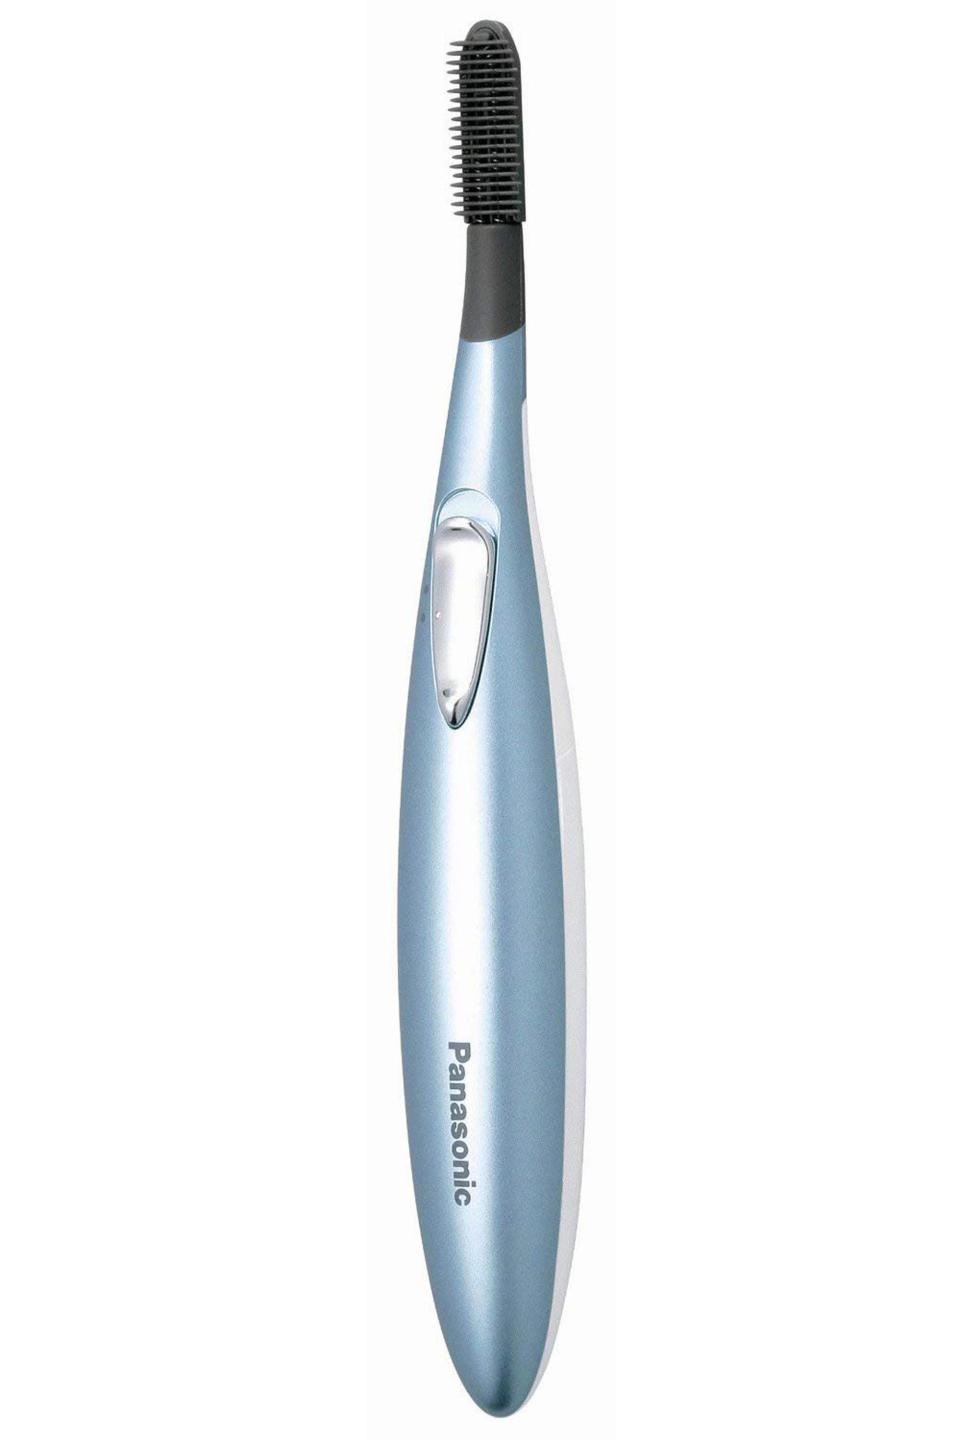 Panasonic Heated Eyelash Curler With Comb Design